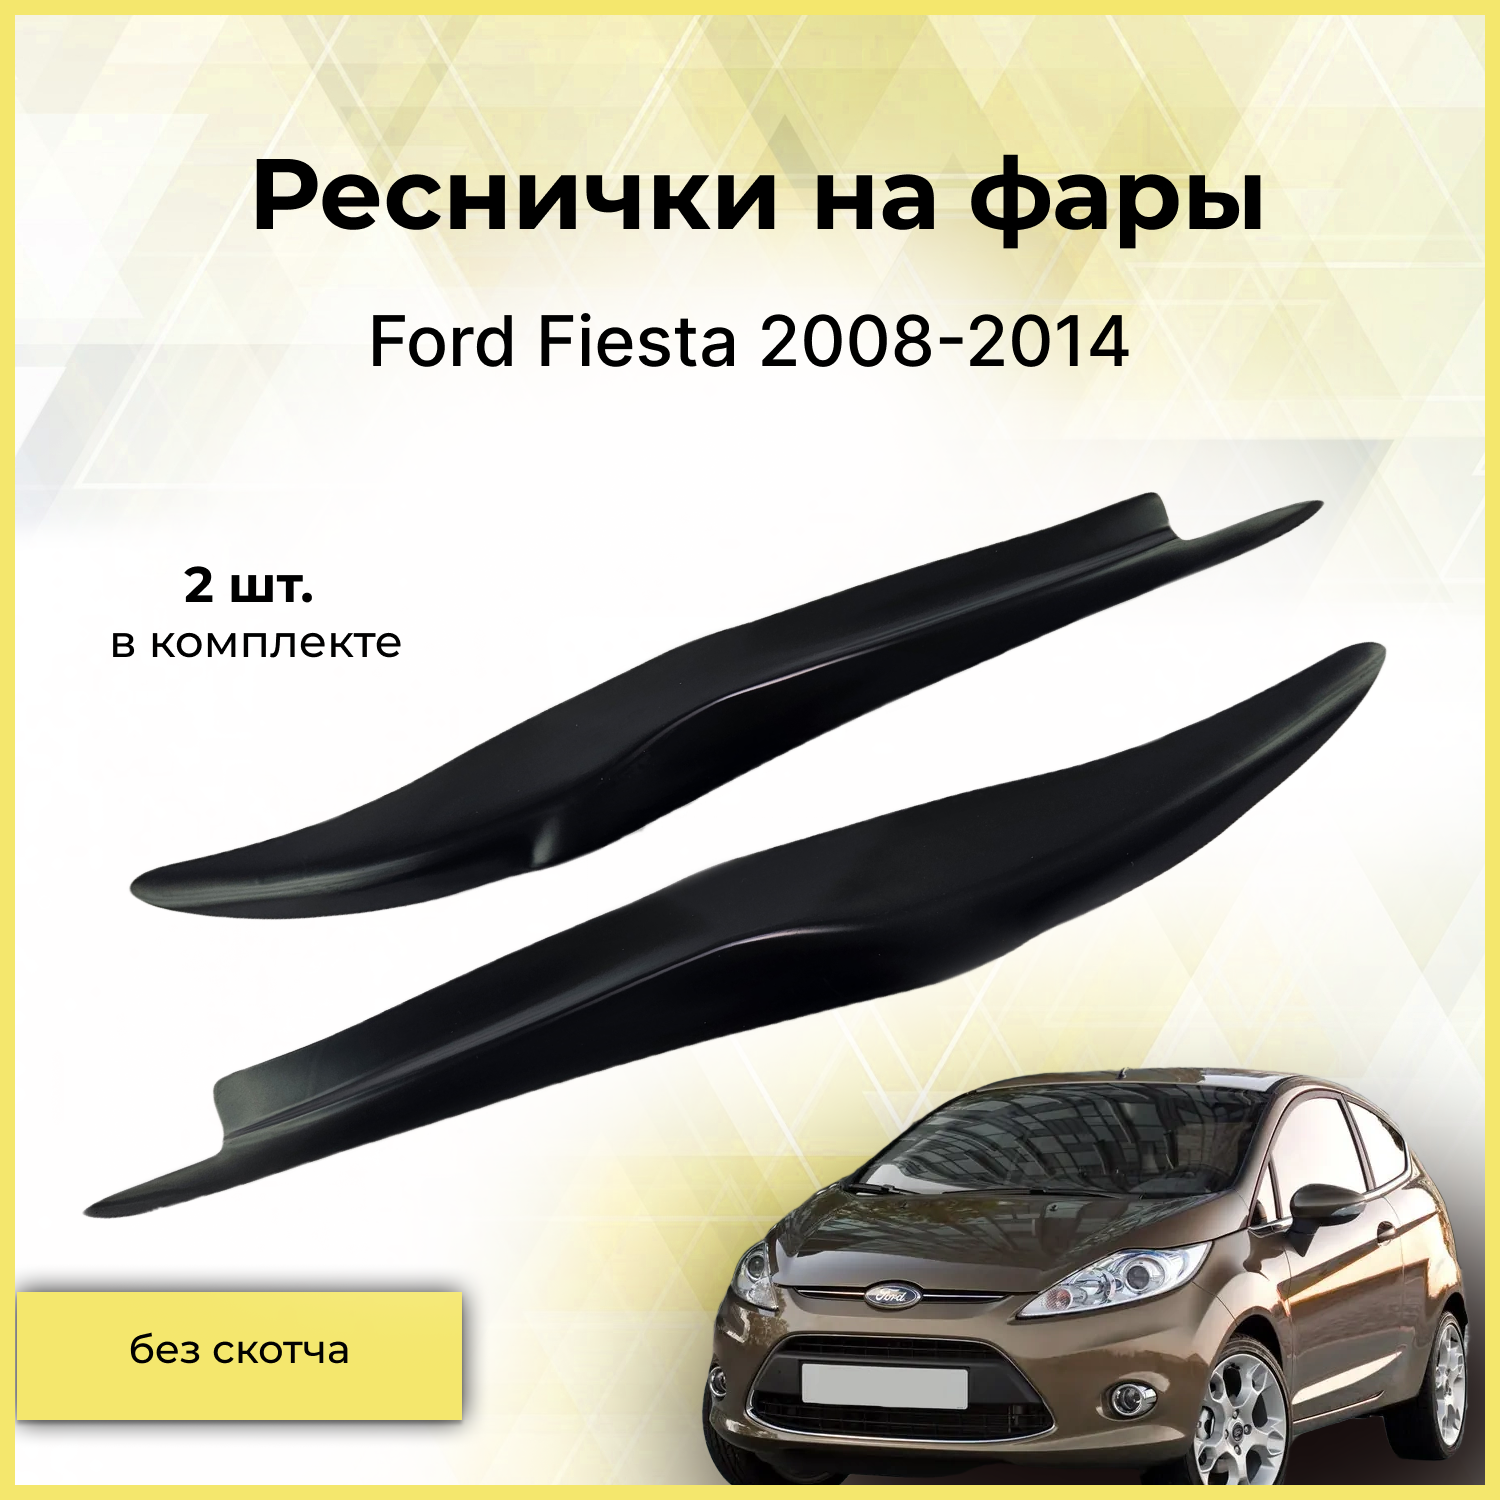 Реснички на фары / Накладки на передние фары для Ford Fiesta (Форд Фиеста0 2008-2014